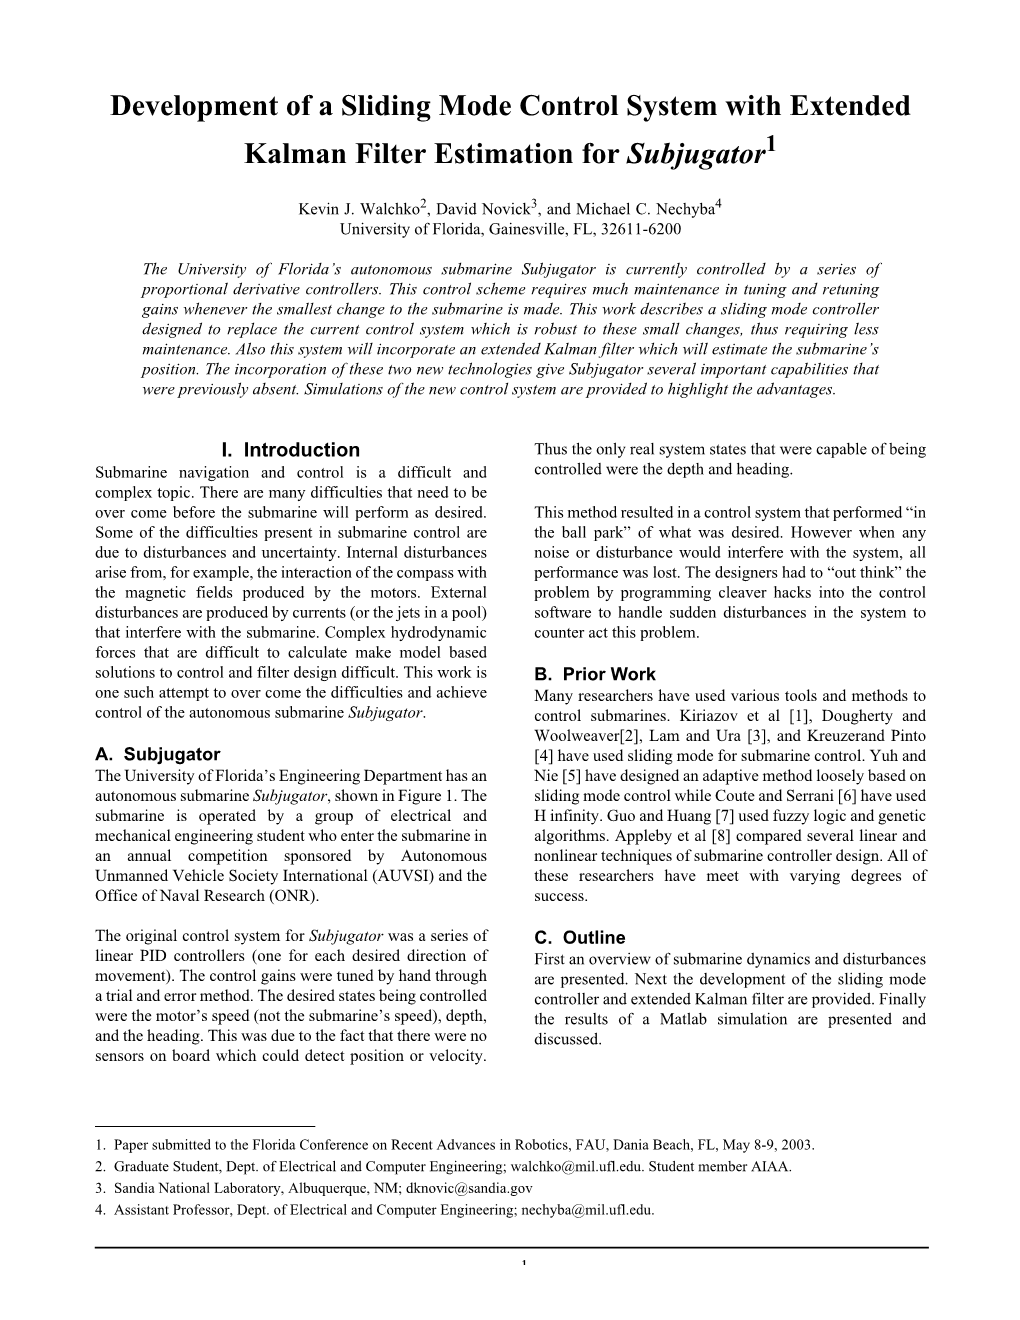 Development of a Sliding Mode Control System with Extended Kalman Filter Estimation for Subjugator1